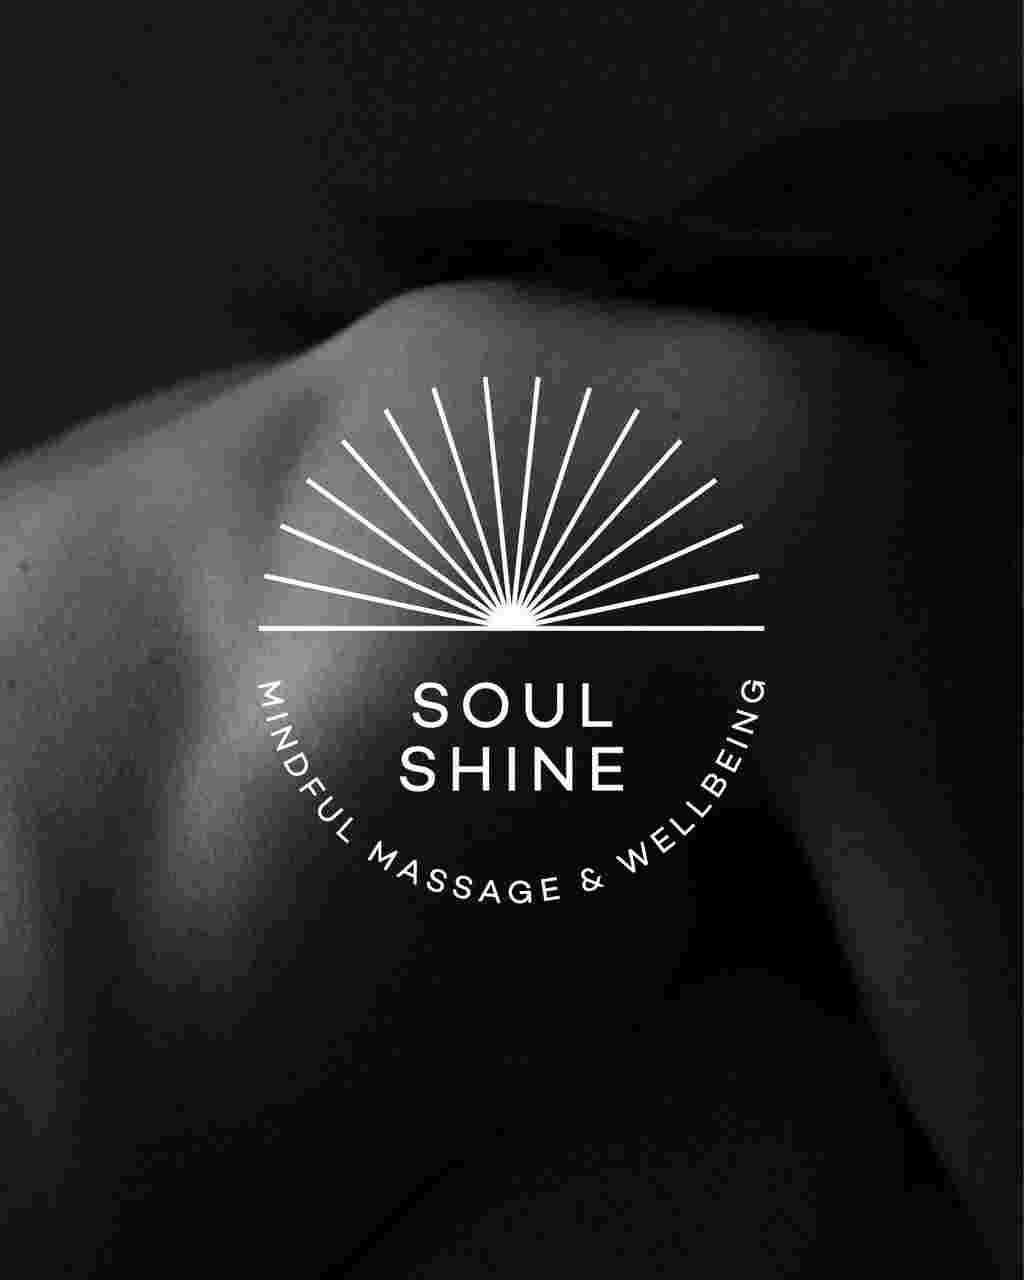 Soul Shine Therapies